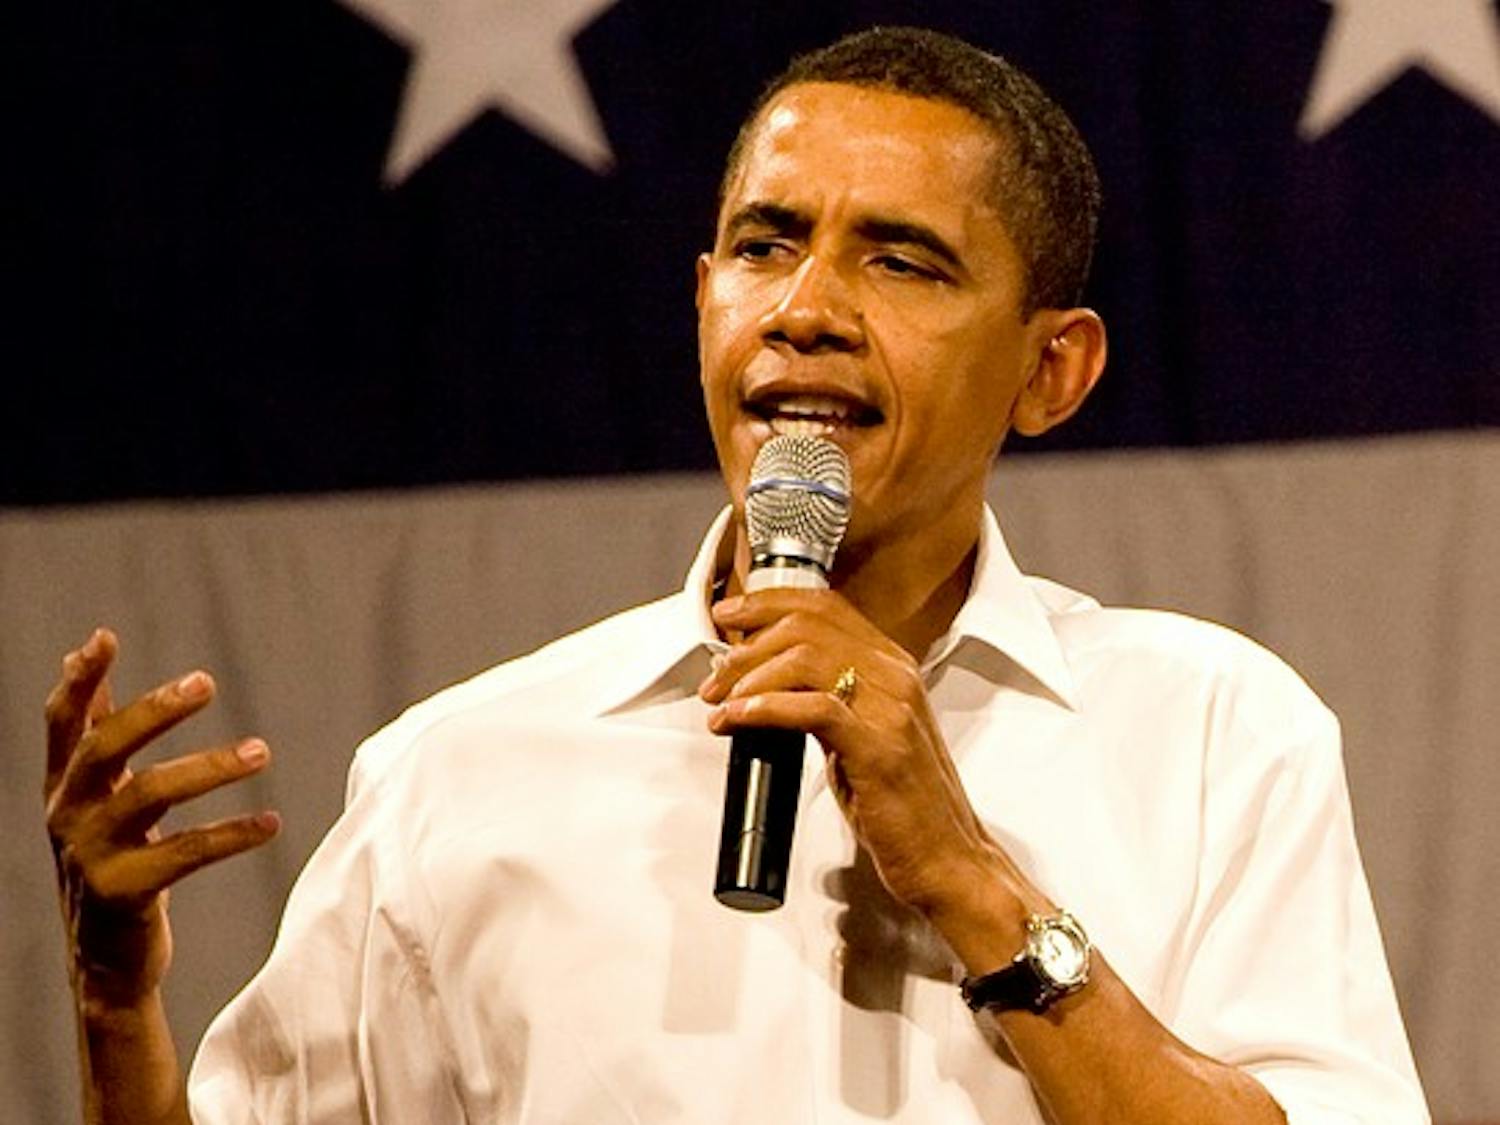 Obama speech likely to focus on economy